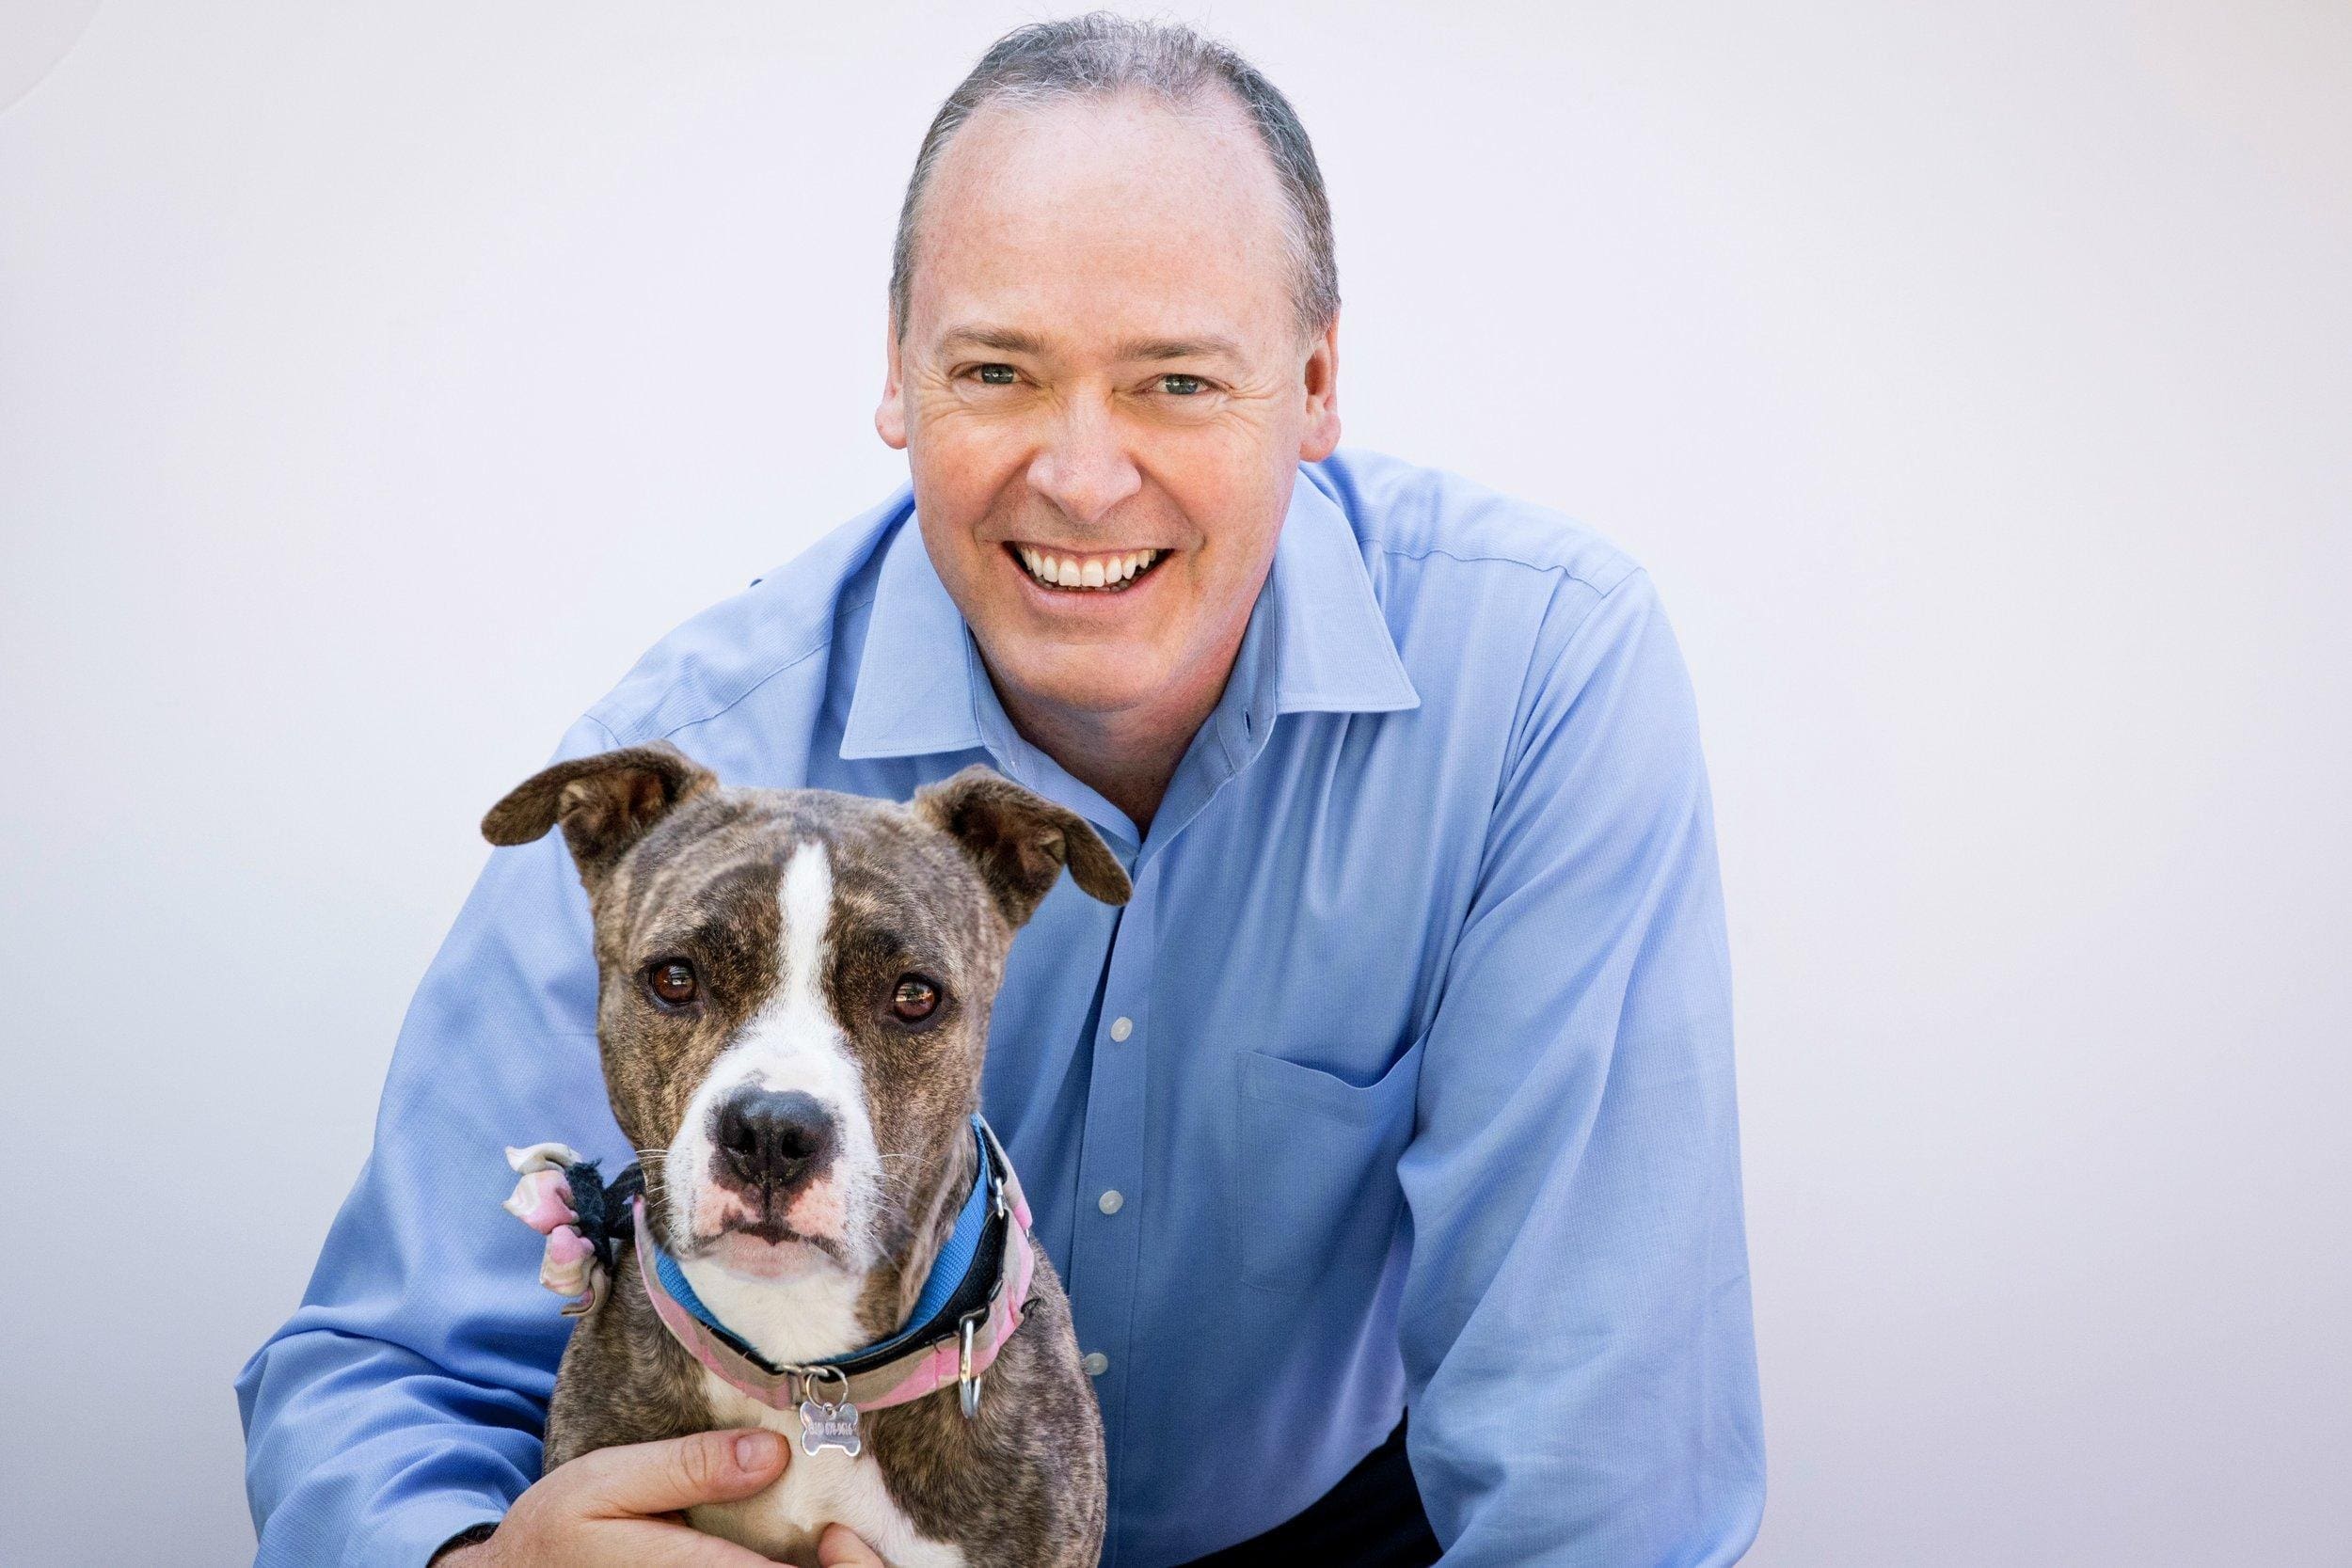 Brett Yates Discusses the Pet Care Business on SullivanSays Podcast